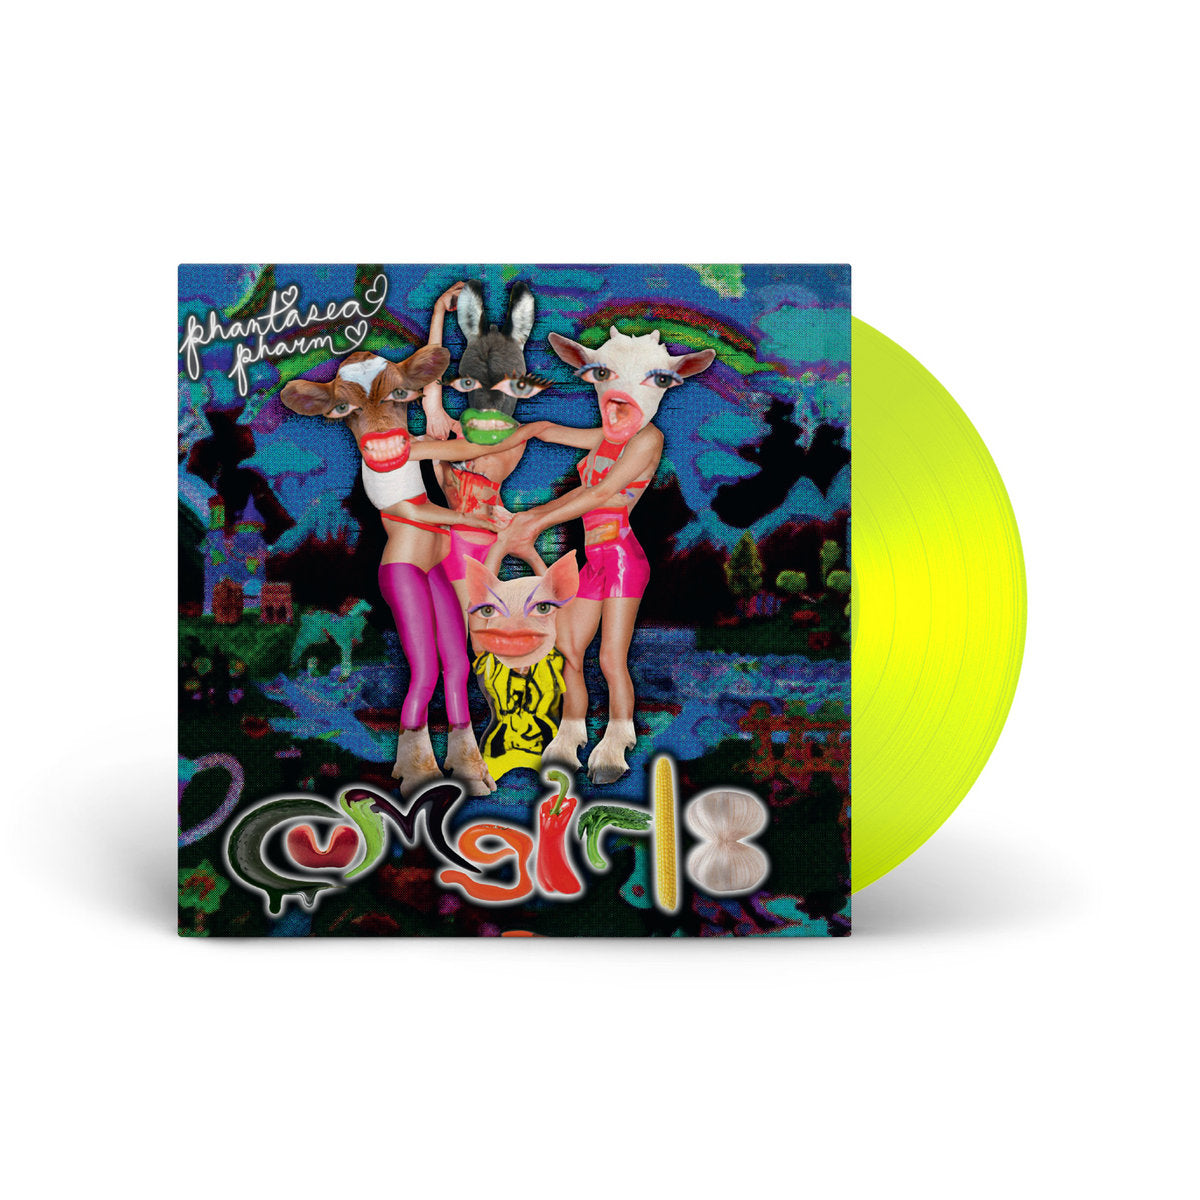 cumgirl8 - Phantasea Pharm | Buy the Vinyl LP now from Flying Nun Records